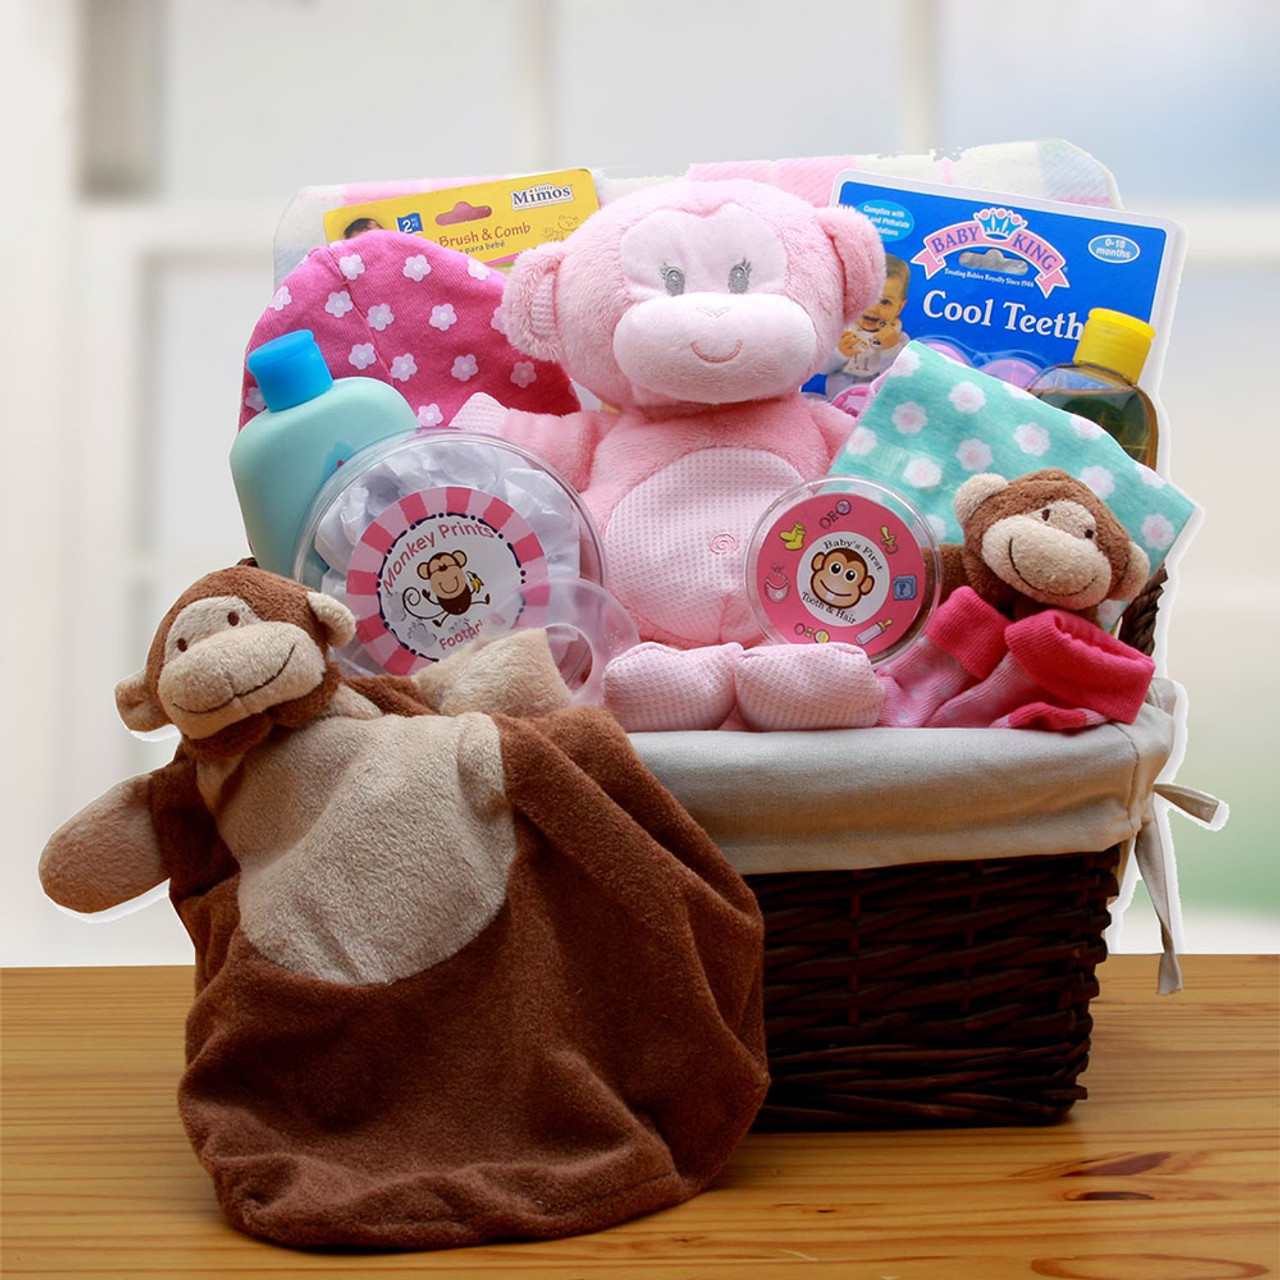 New Little Monkey Baby Gift Basket (Pink) product image